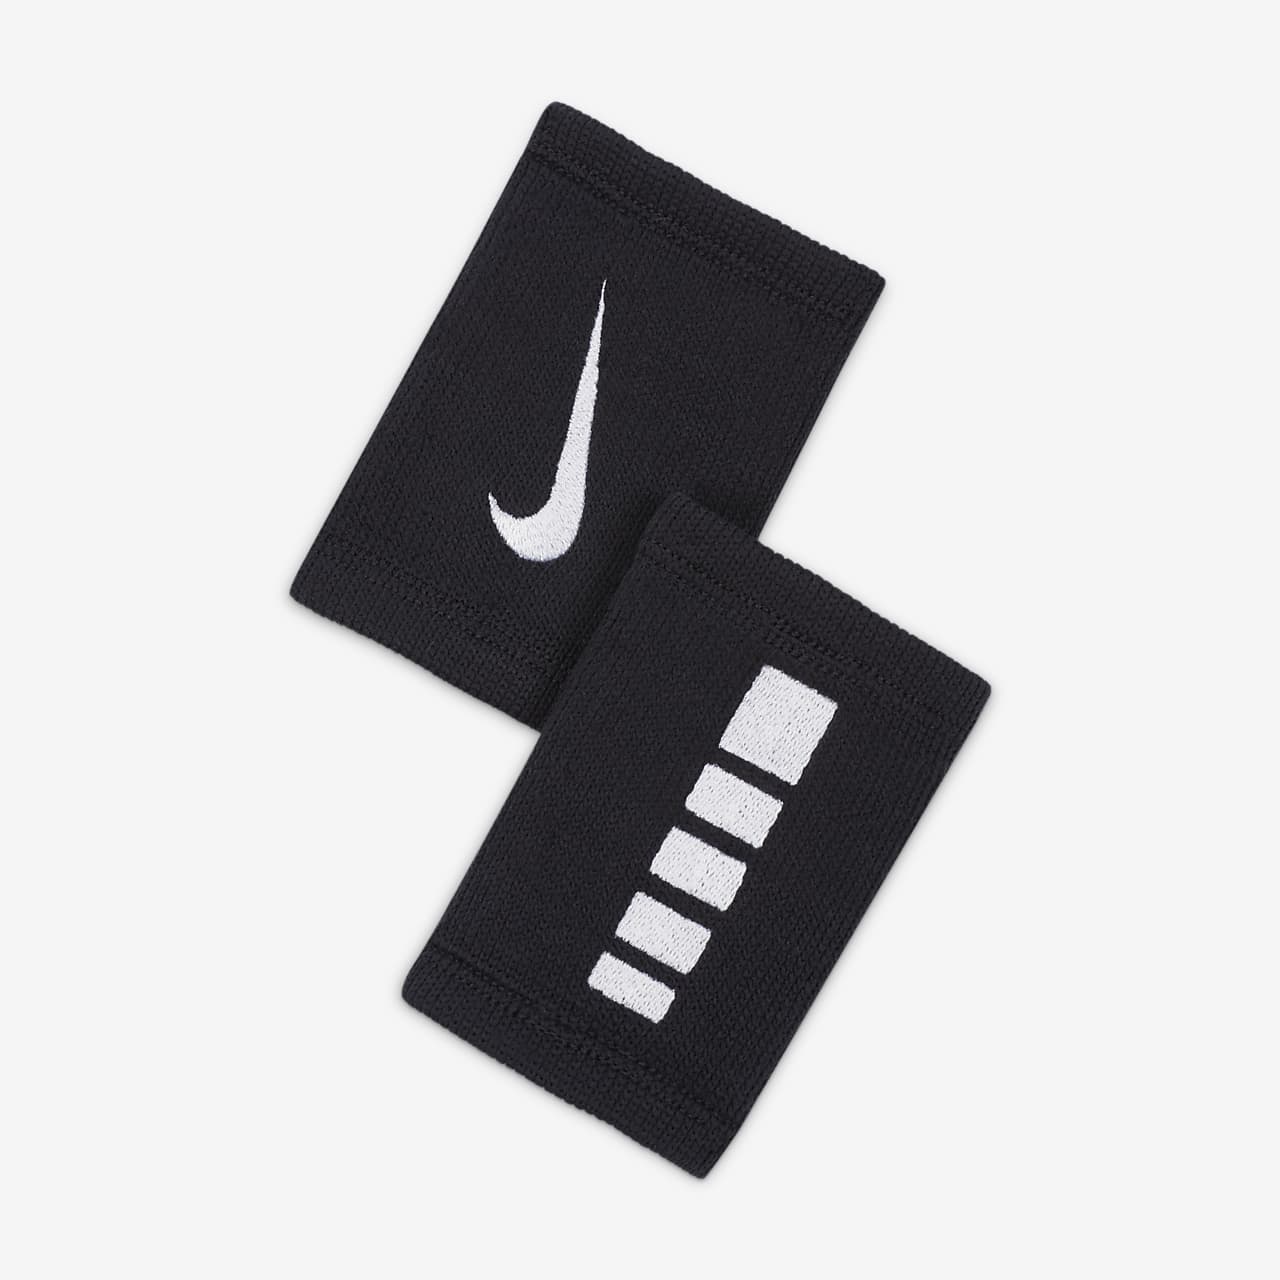 Nike JUST DO IT. bracelet wristband jordan sport nba silicone rubber baller  3D | eBay | Just do it, Christian accessories, Silicone bracelets